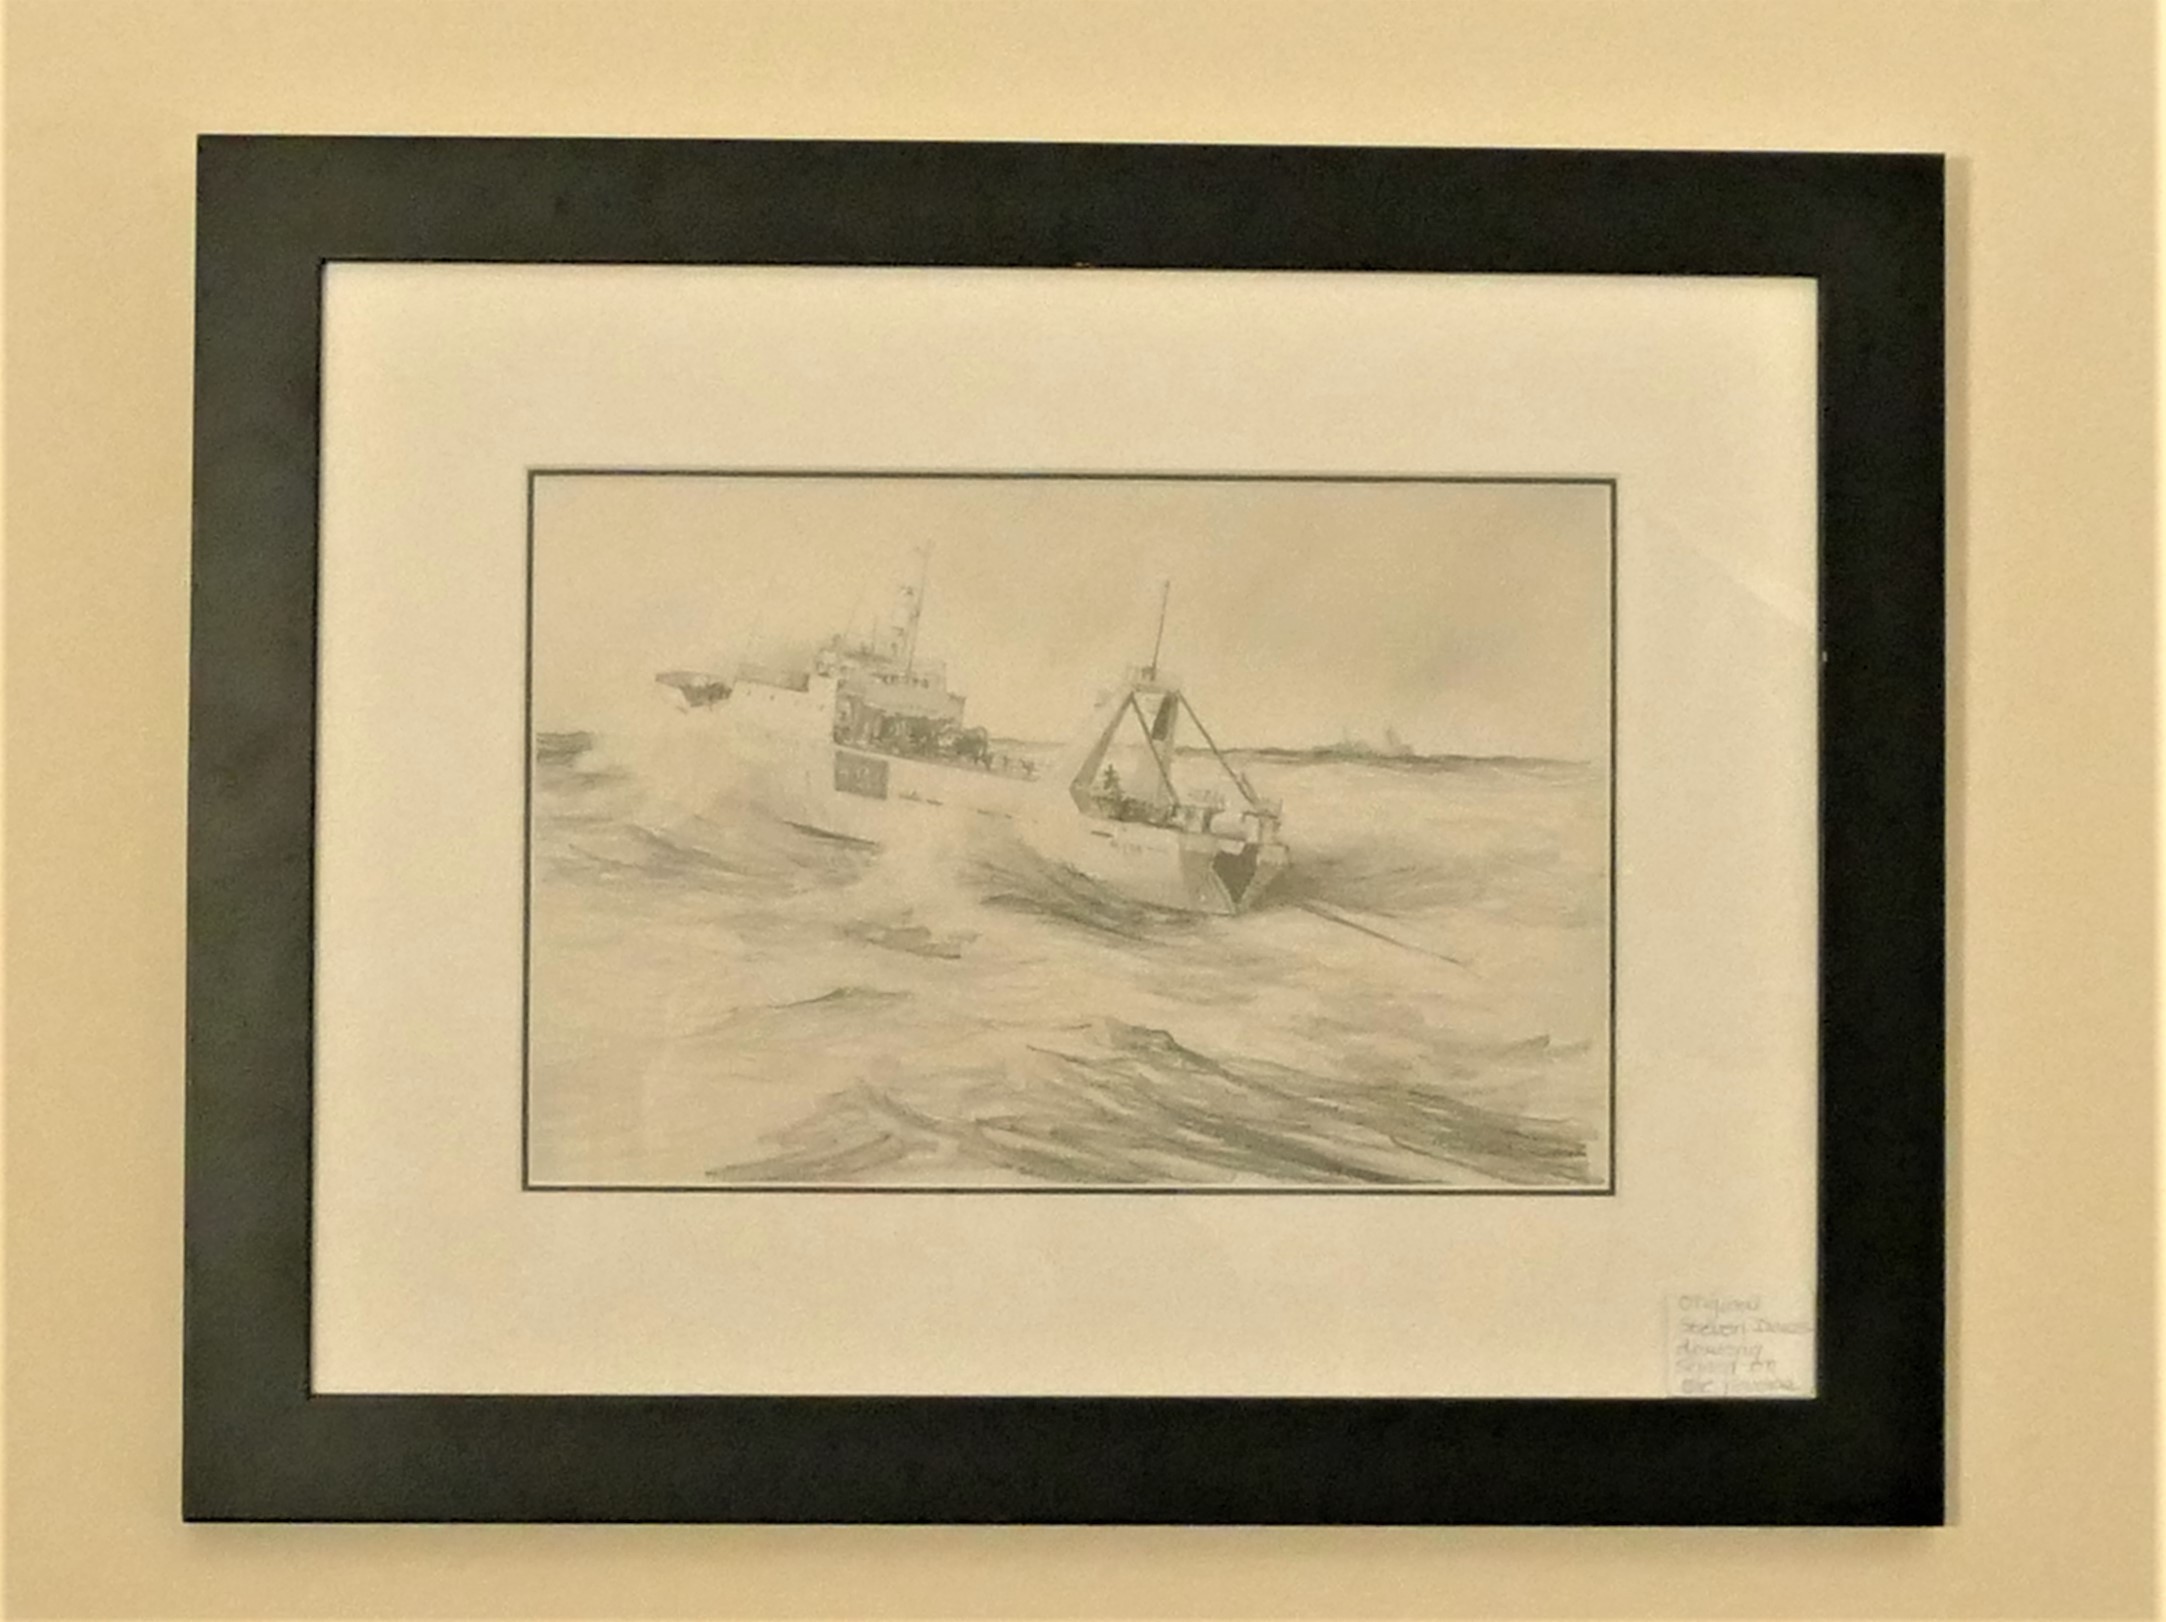 J. Steven Dews (b.1949), Hull Deep Sea Trawler, H294, original pencil sketch for the 1980 Amoco